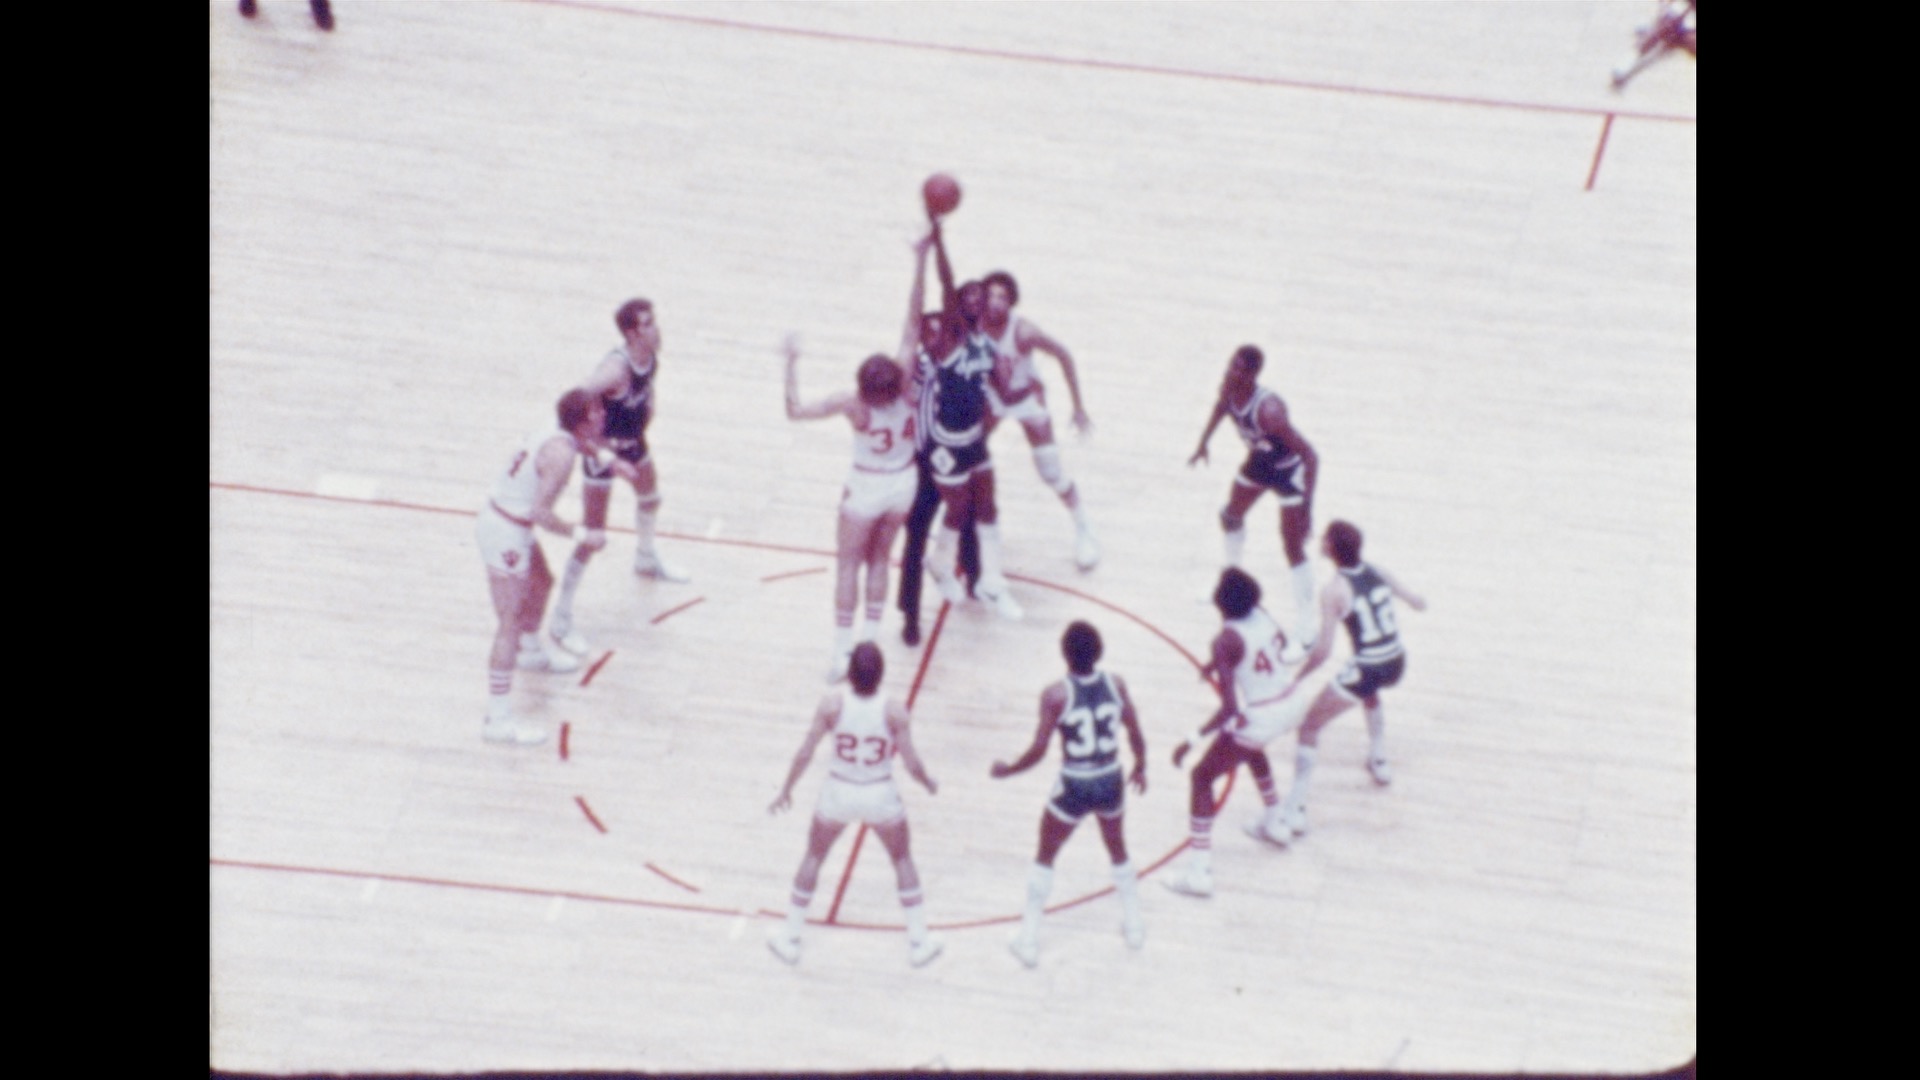 MSU Basketball vs. Indiana (away), 1977